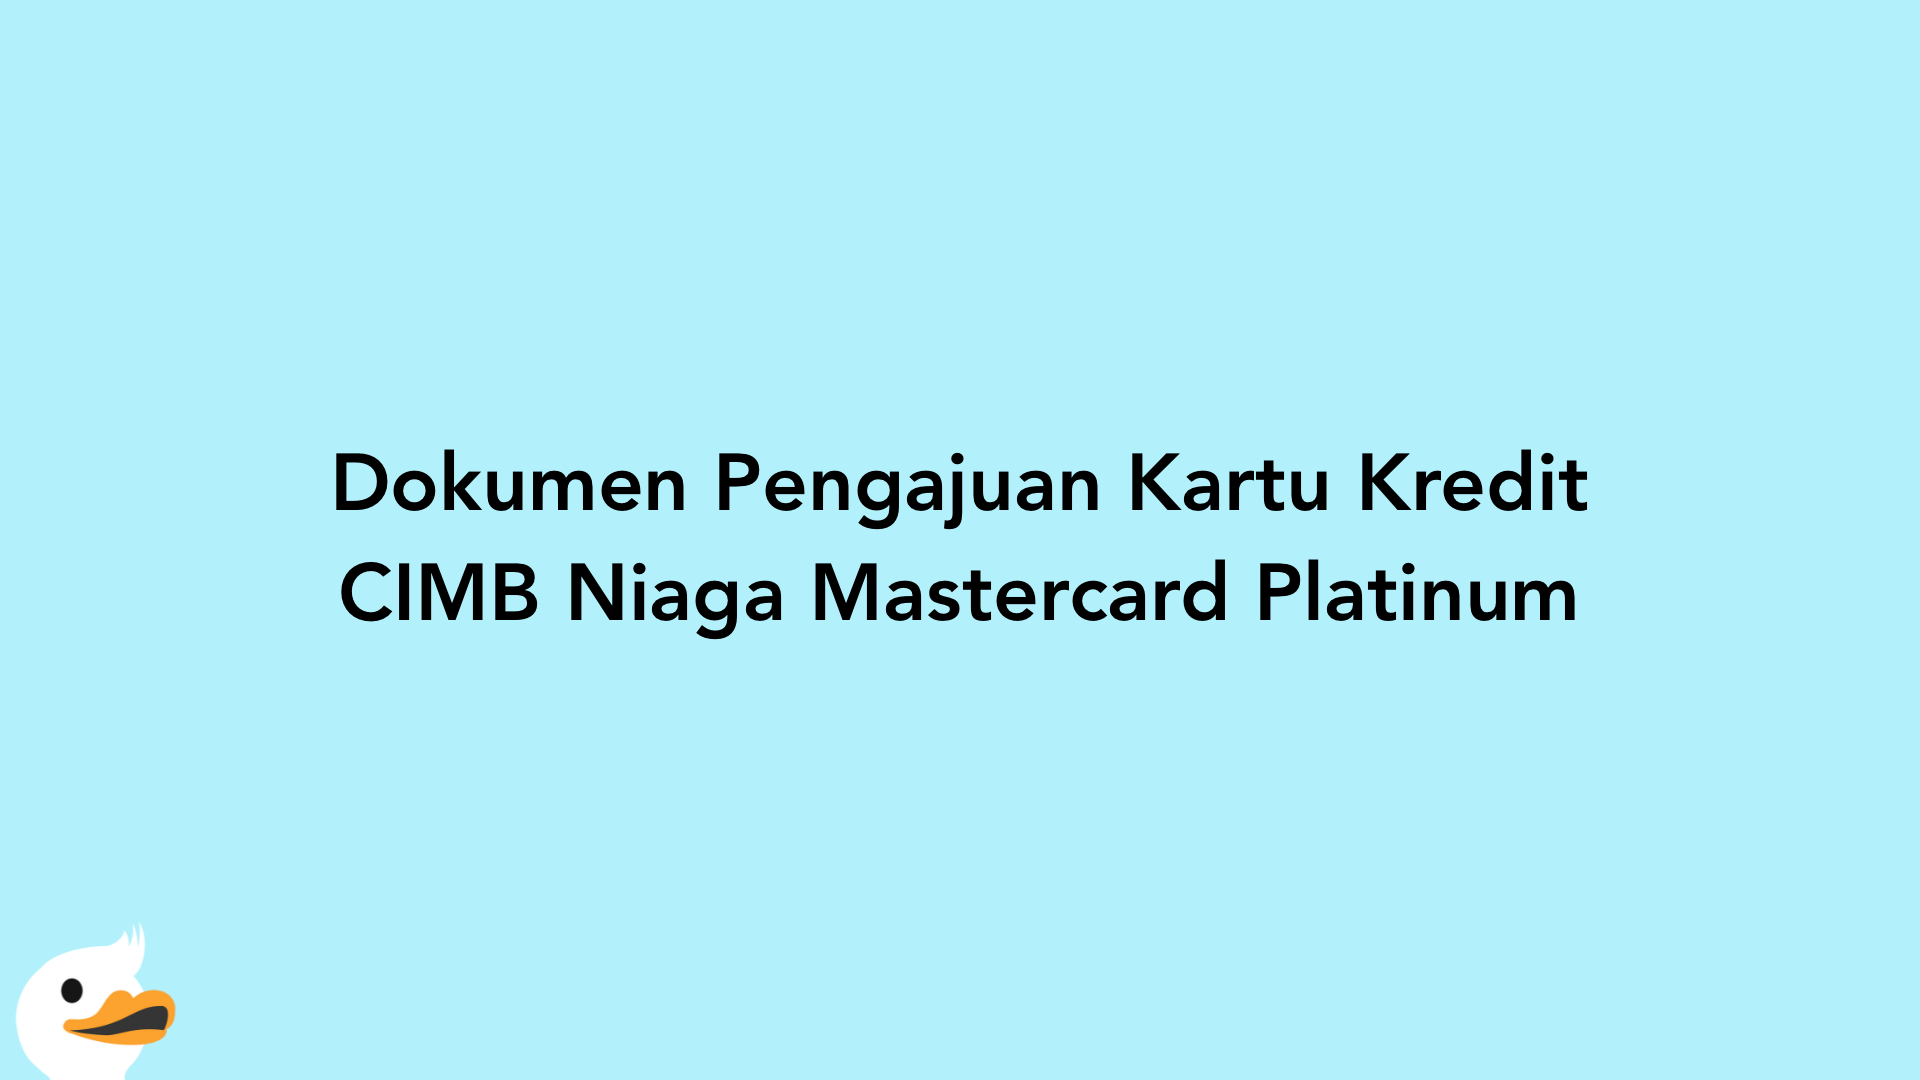 Dokumen Pengajuan Kartu Kredit CIMB Niaga Mastercard Platinum